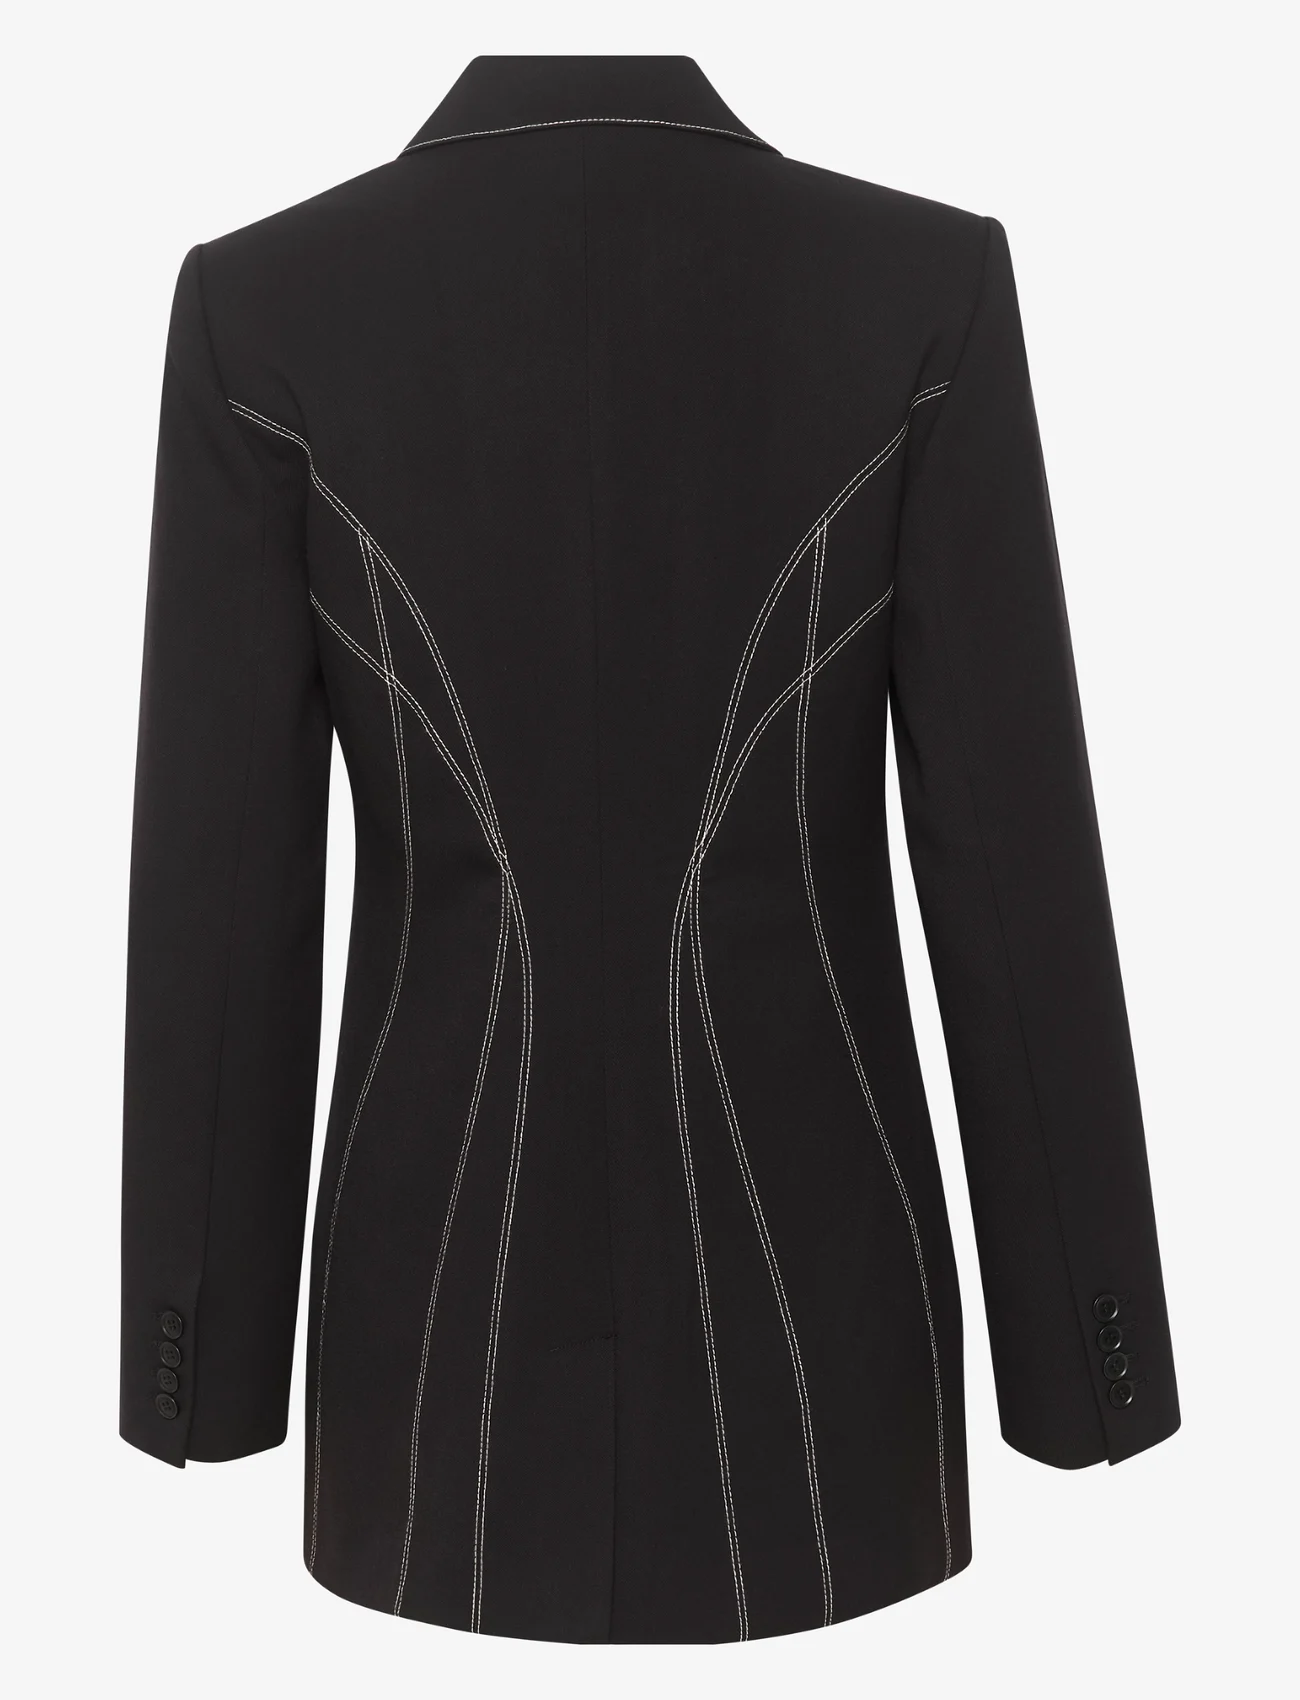 Gestuz - AcuraGZ blazer - ballīšu apģērbs par outlet cenām - black - 1